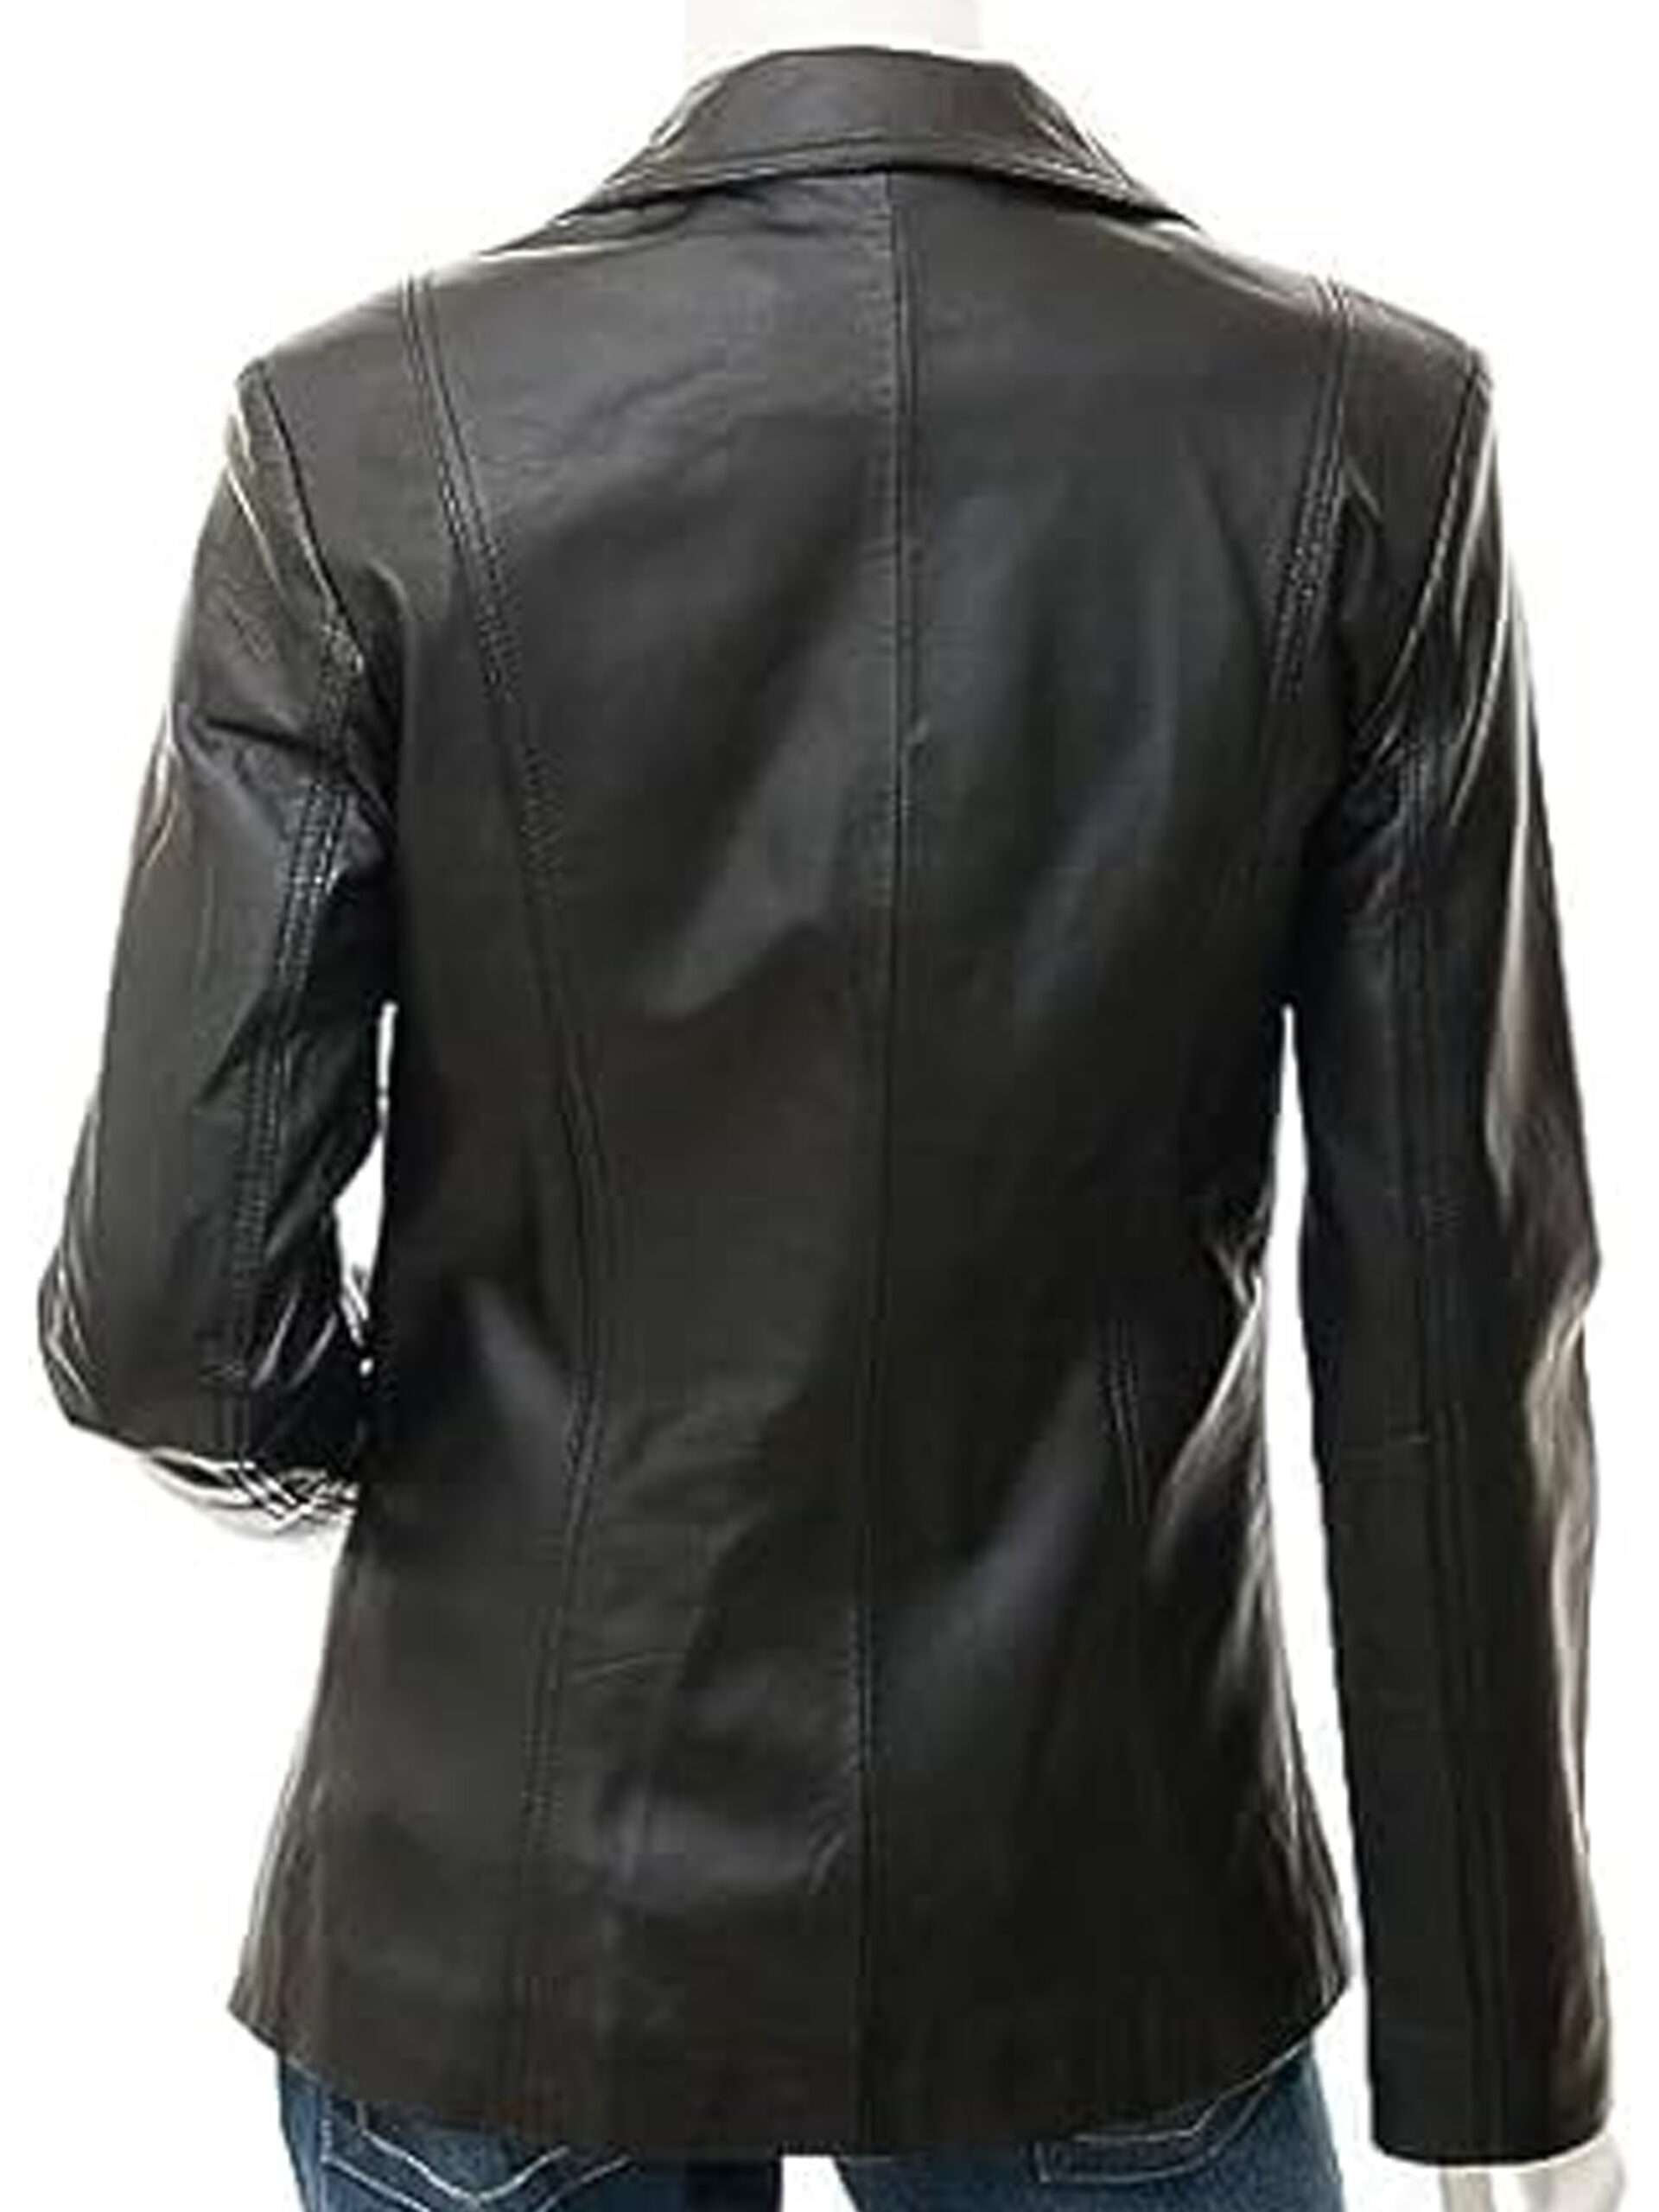 Two-Button Black Leather Blazer Jacket